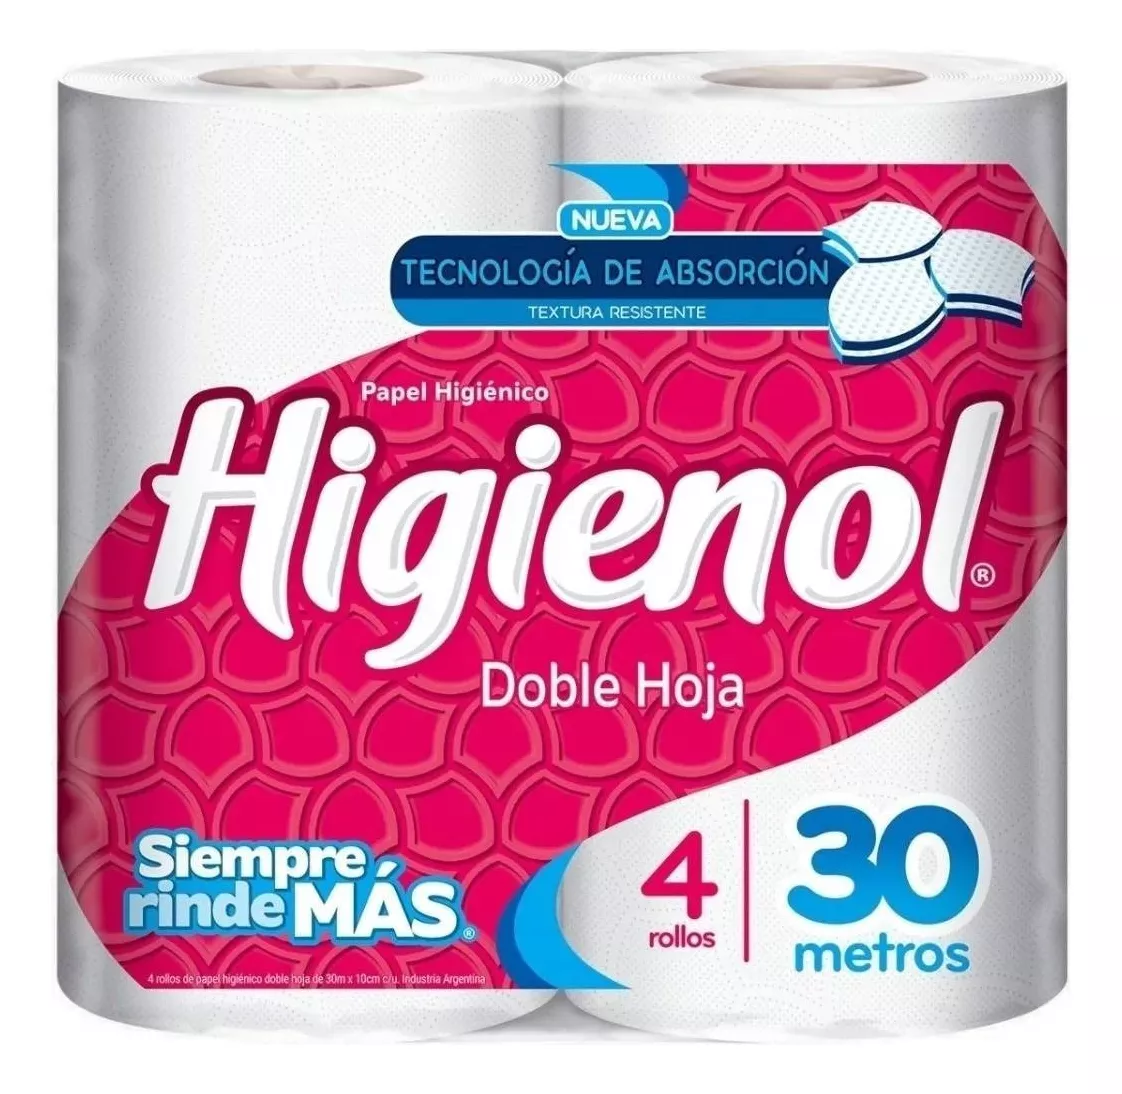 Primera imagen para búsqueda de papel higienico higienol doble hoja